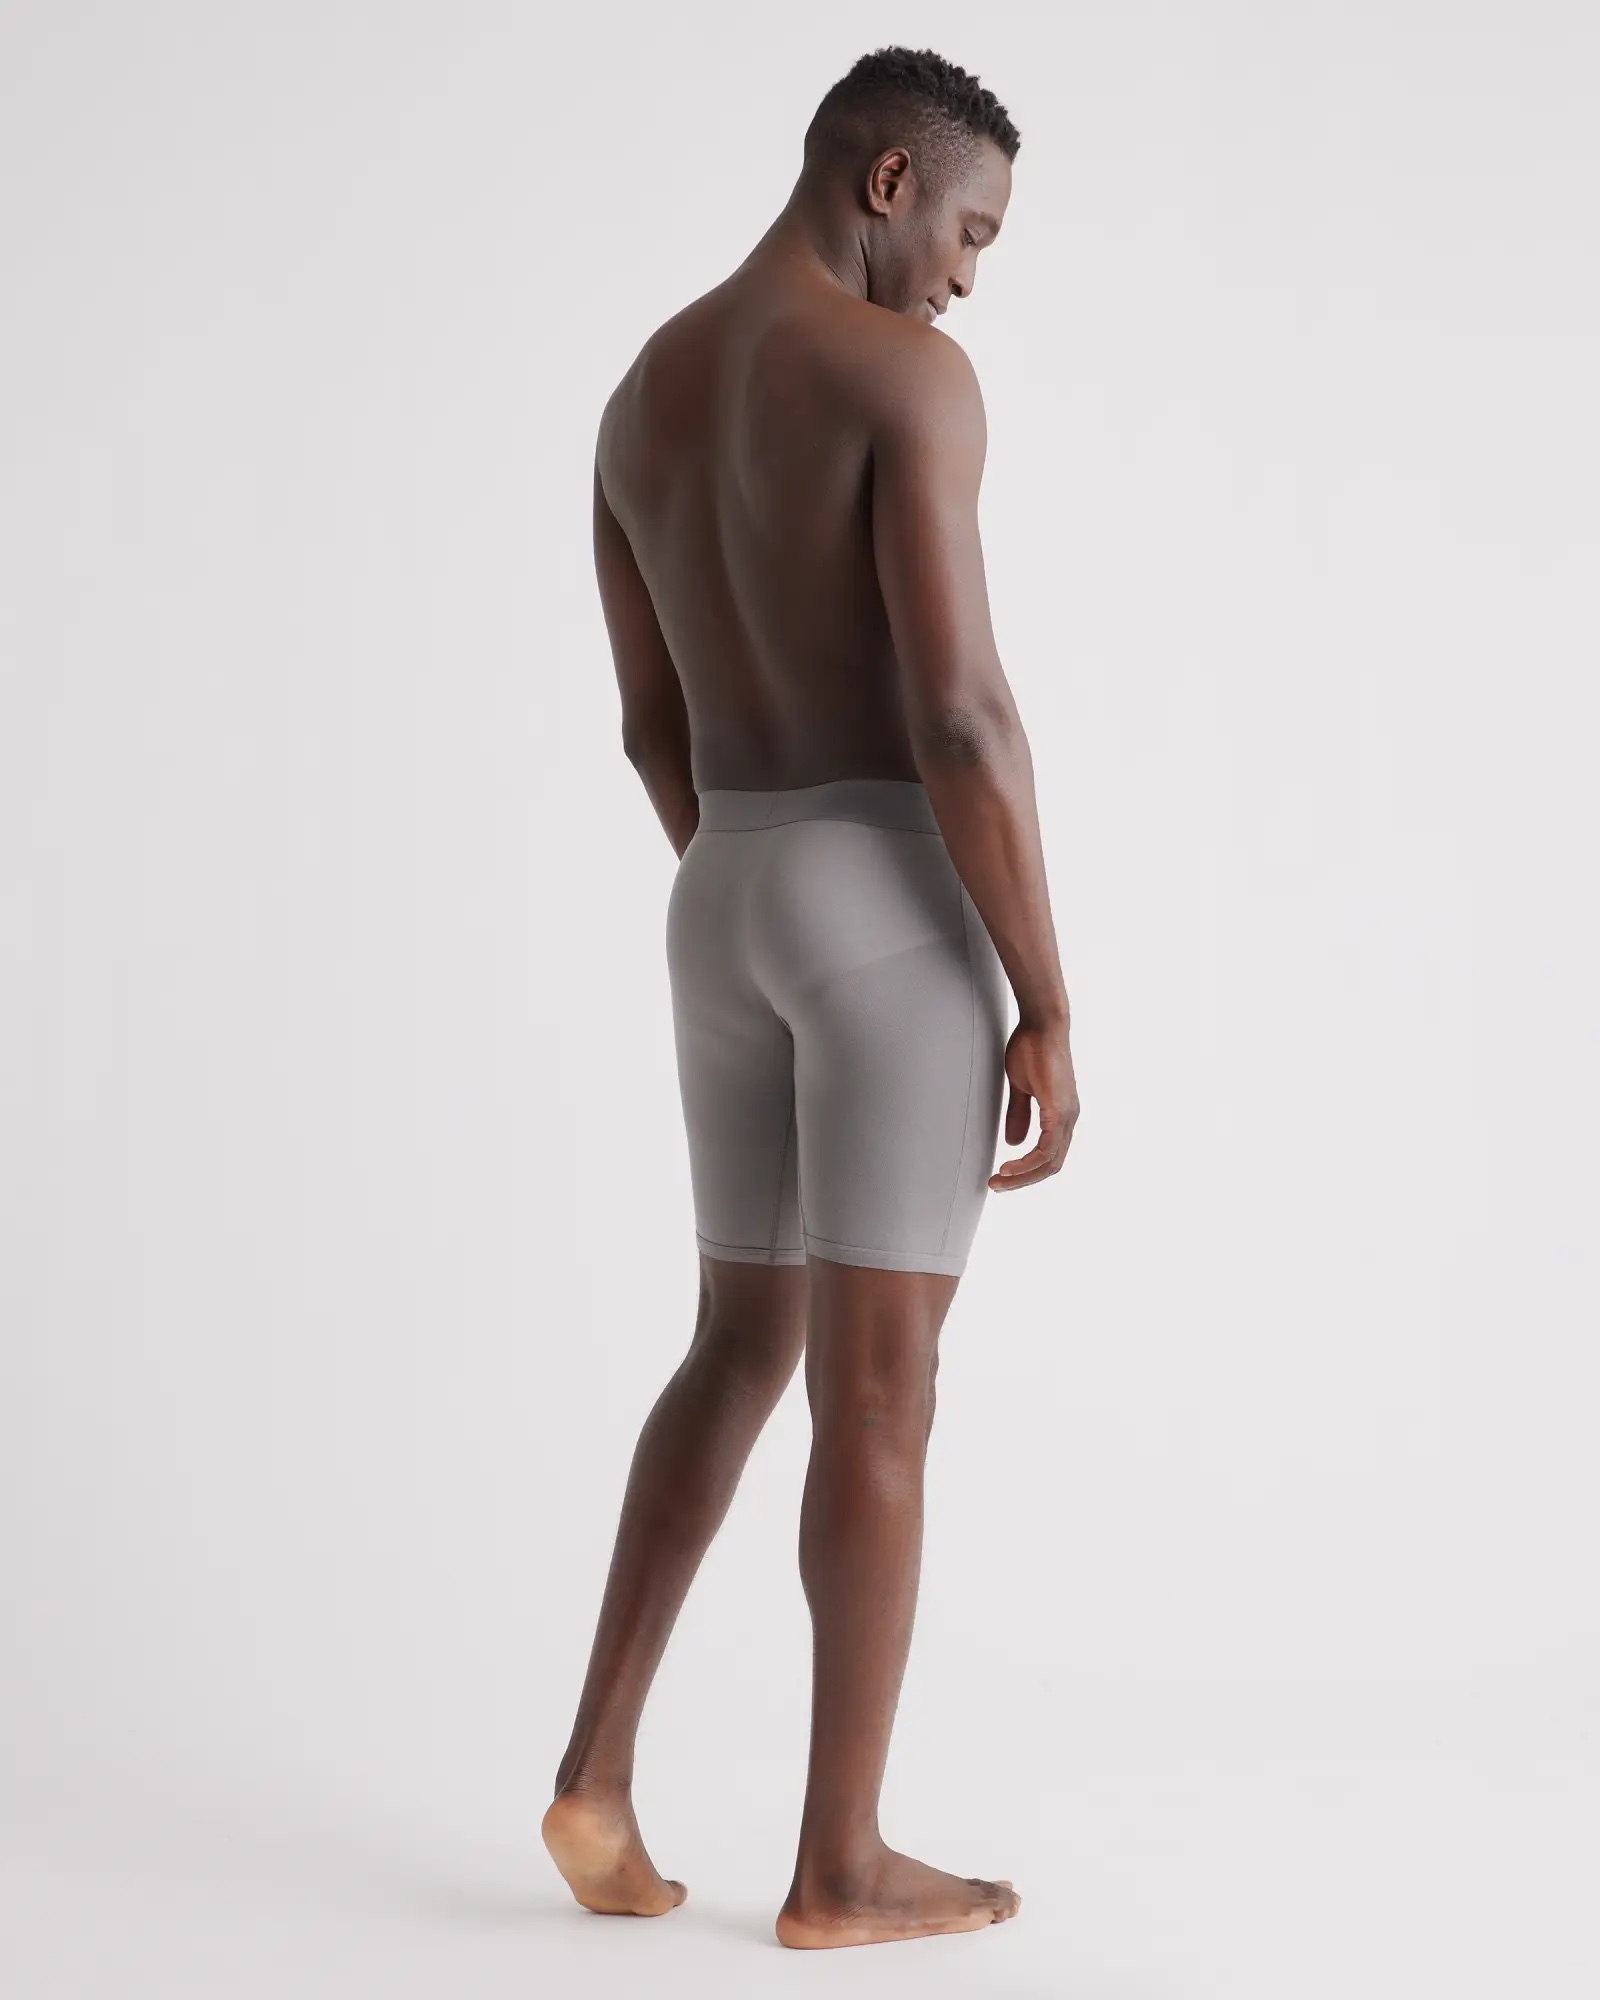 A model faces away, wearing gray 8" long boxer briefs.